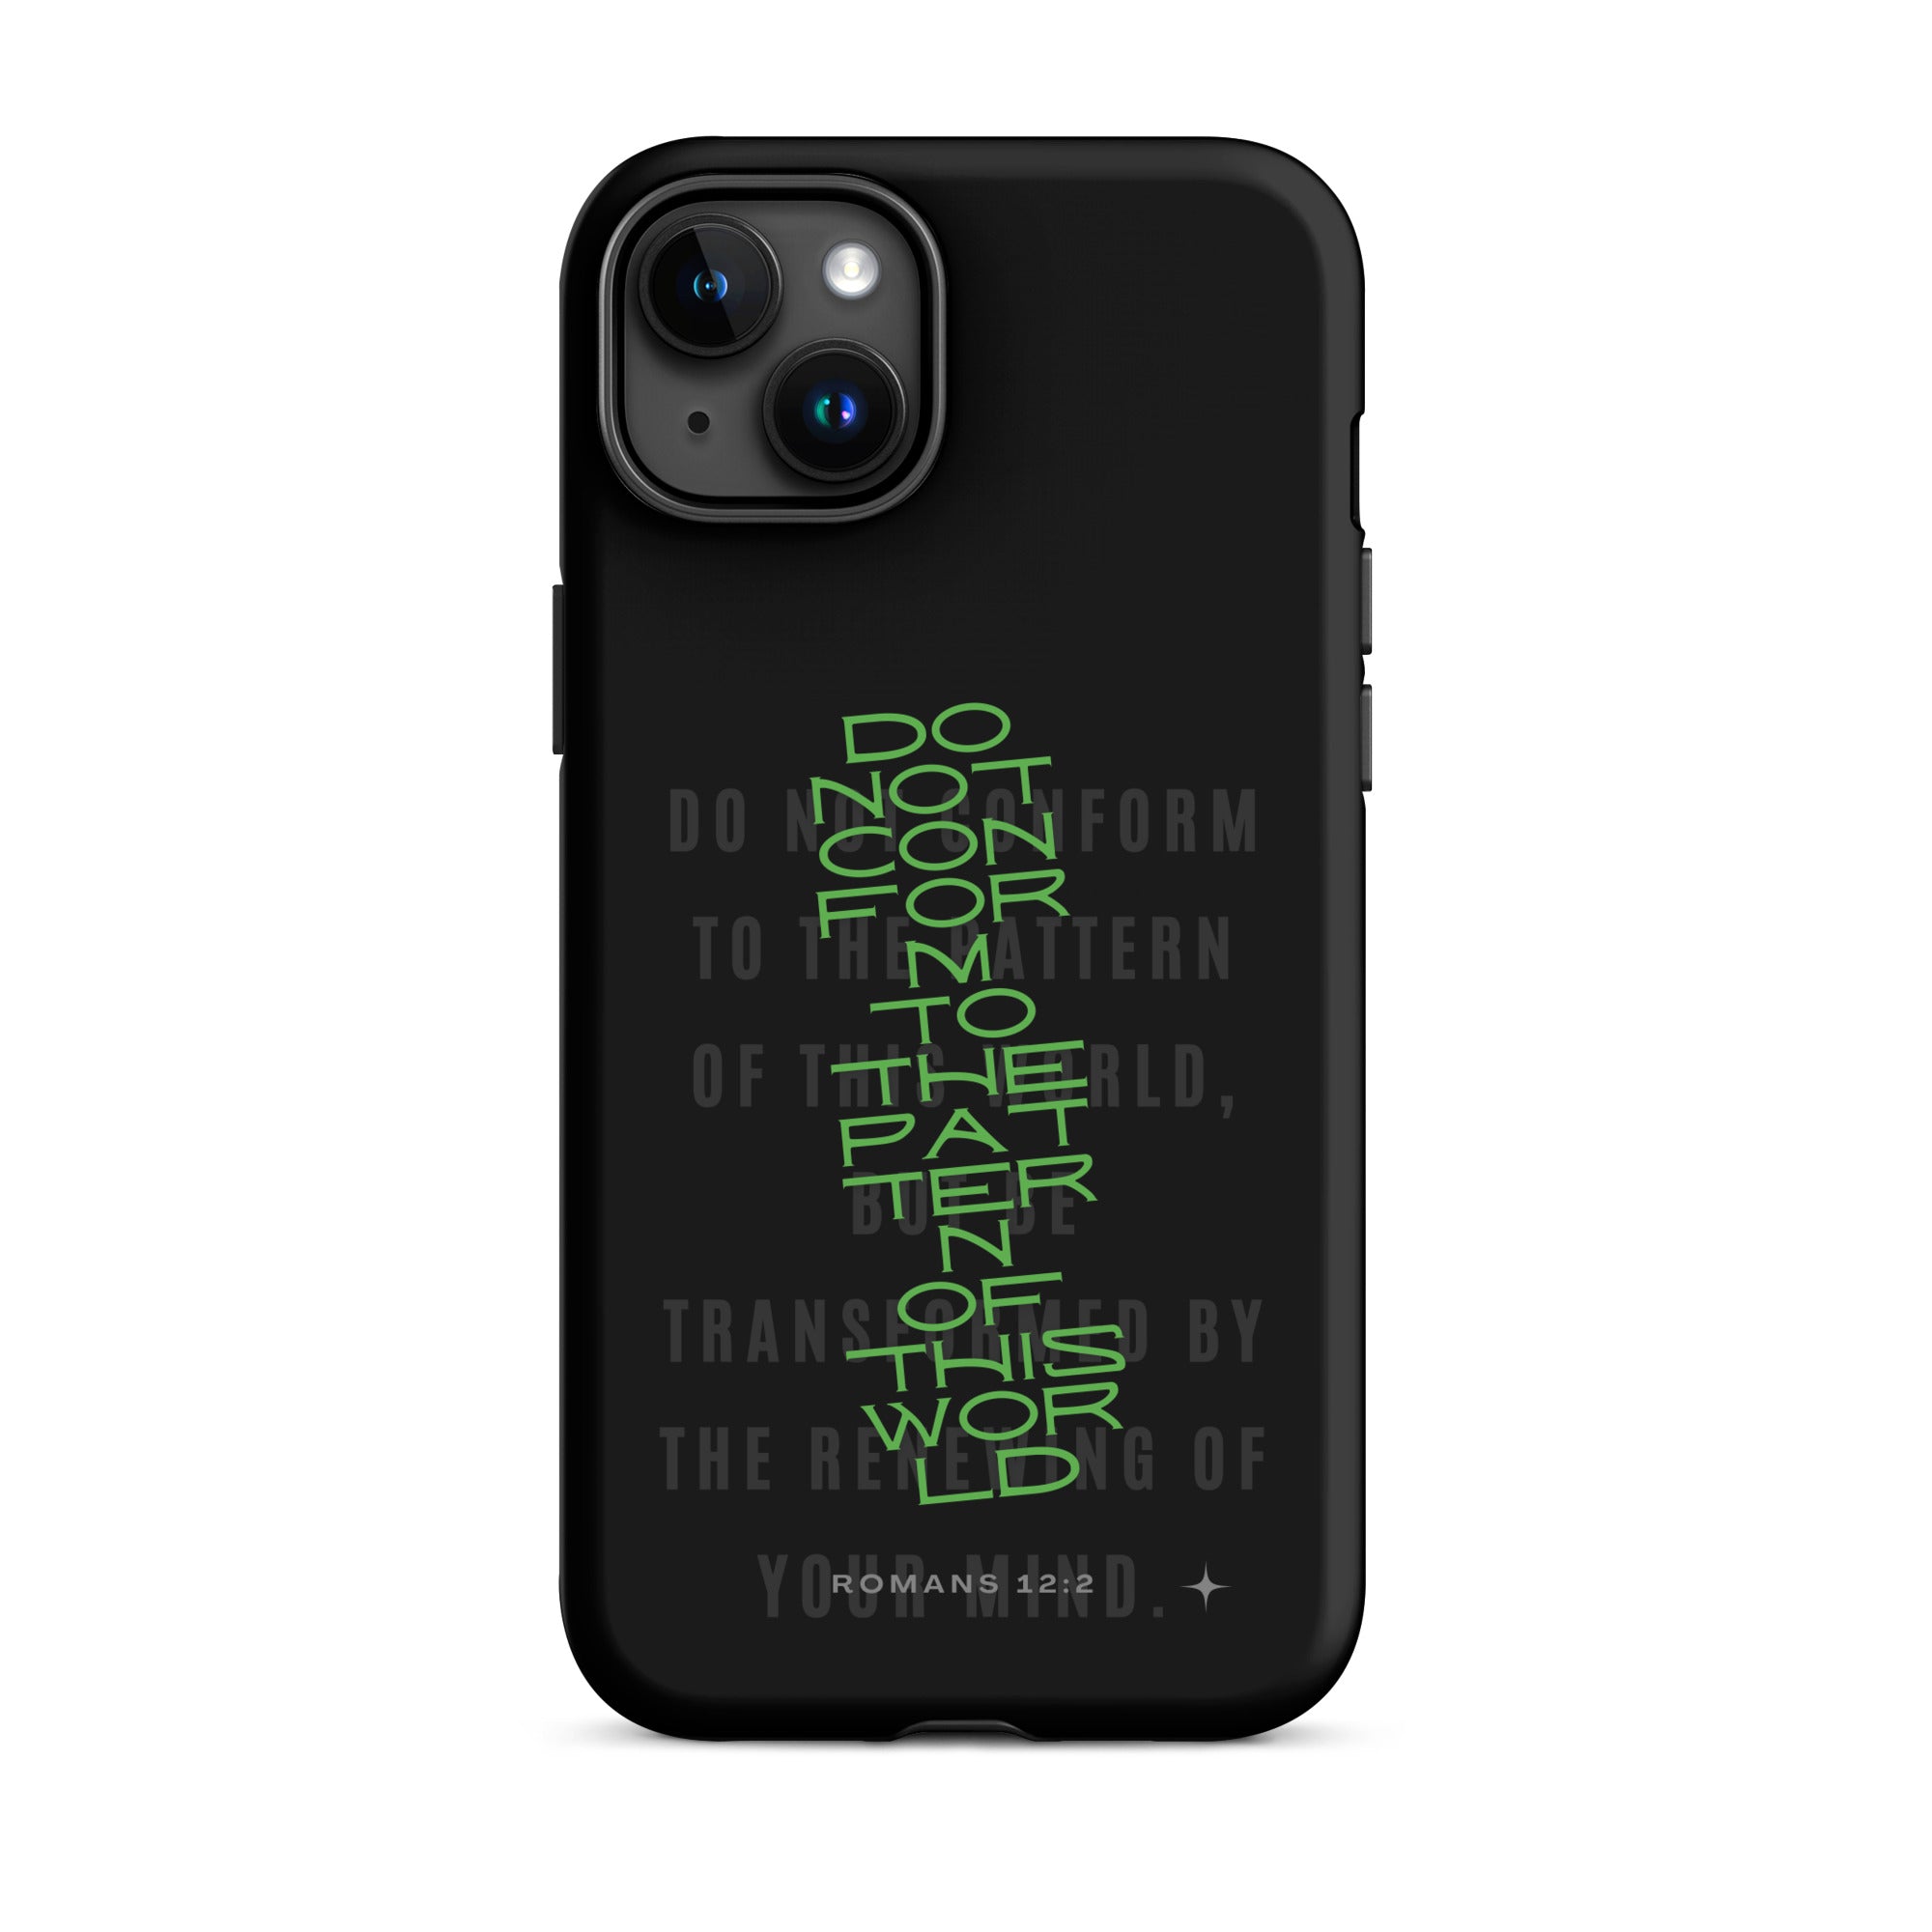 iPhone Case - Romans 12:2